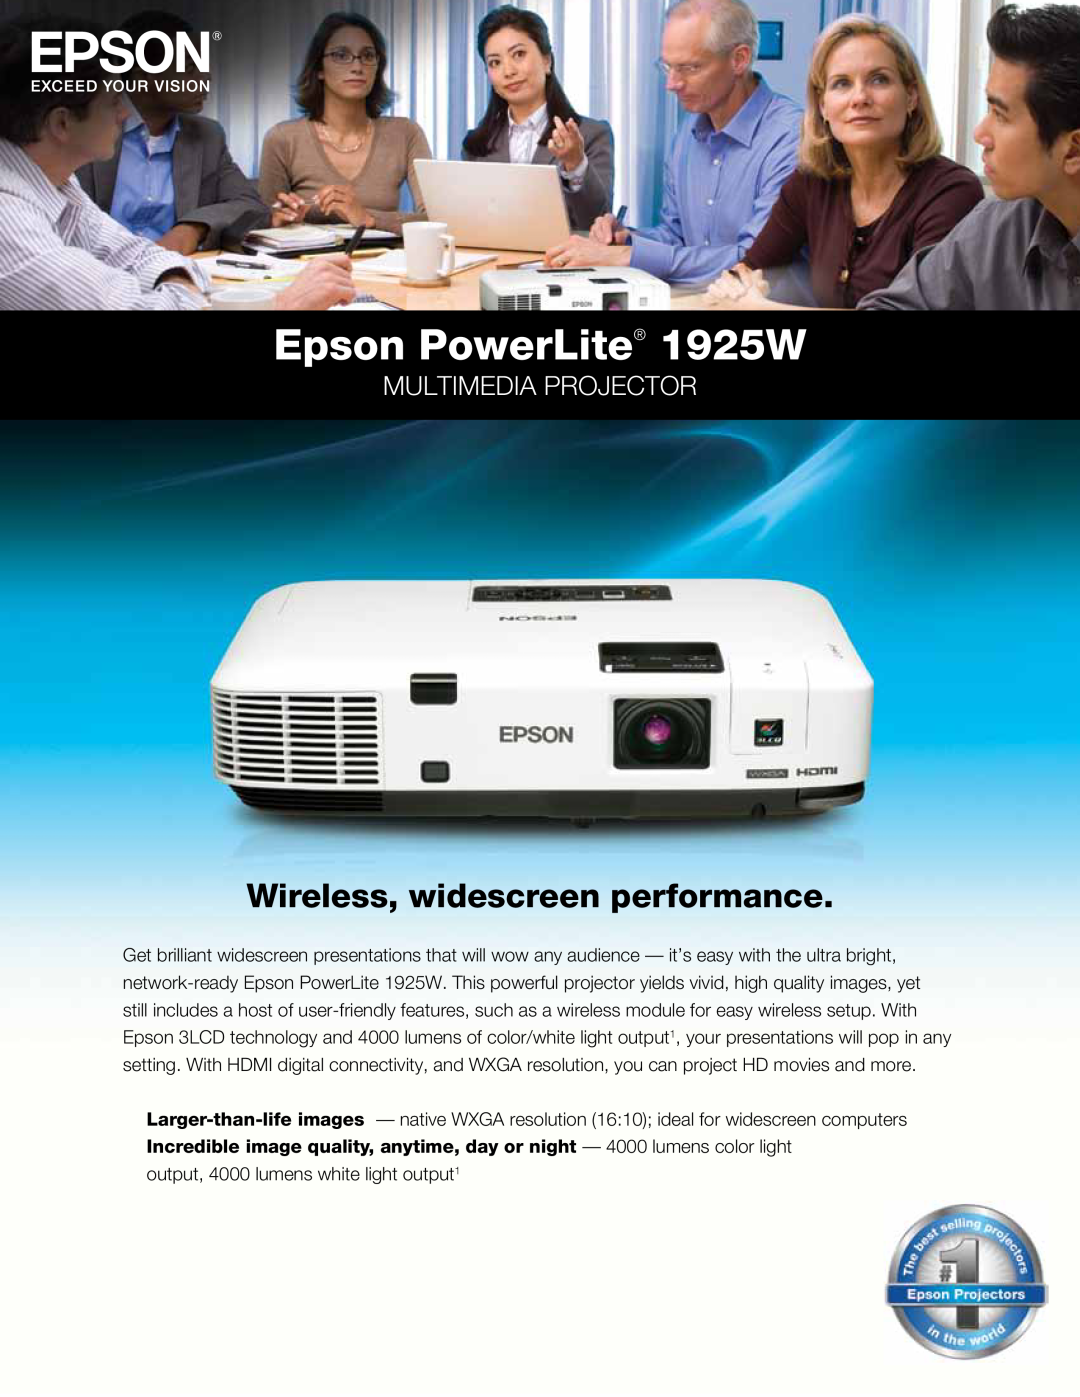 Epson specifications Epson PowerLite 1925W, Wireless, widescreen performance, Multimedia Projector 